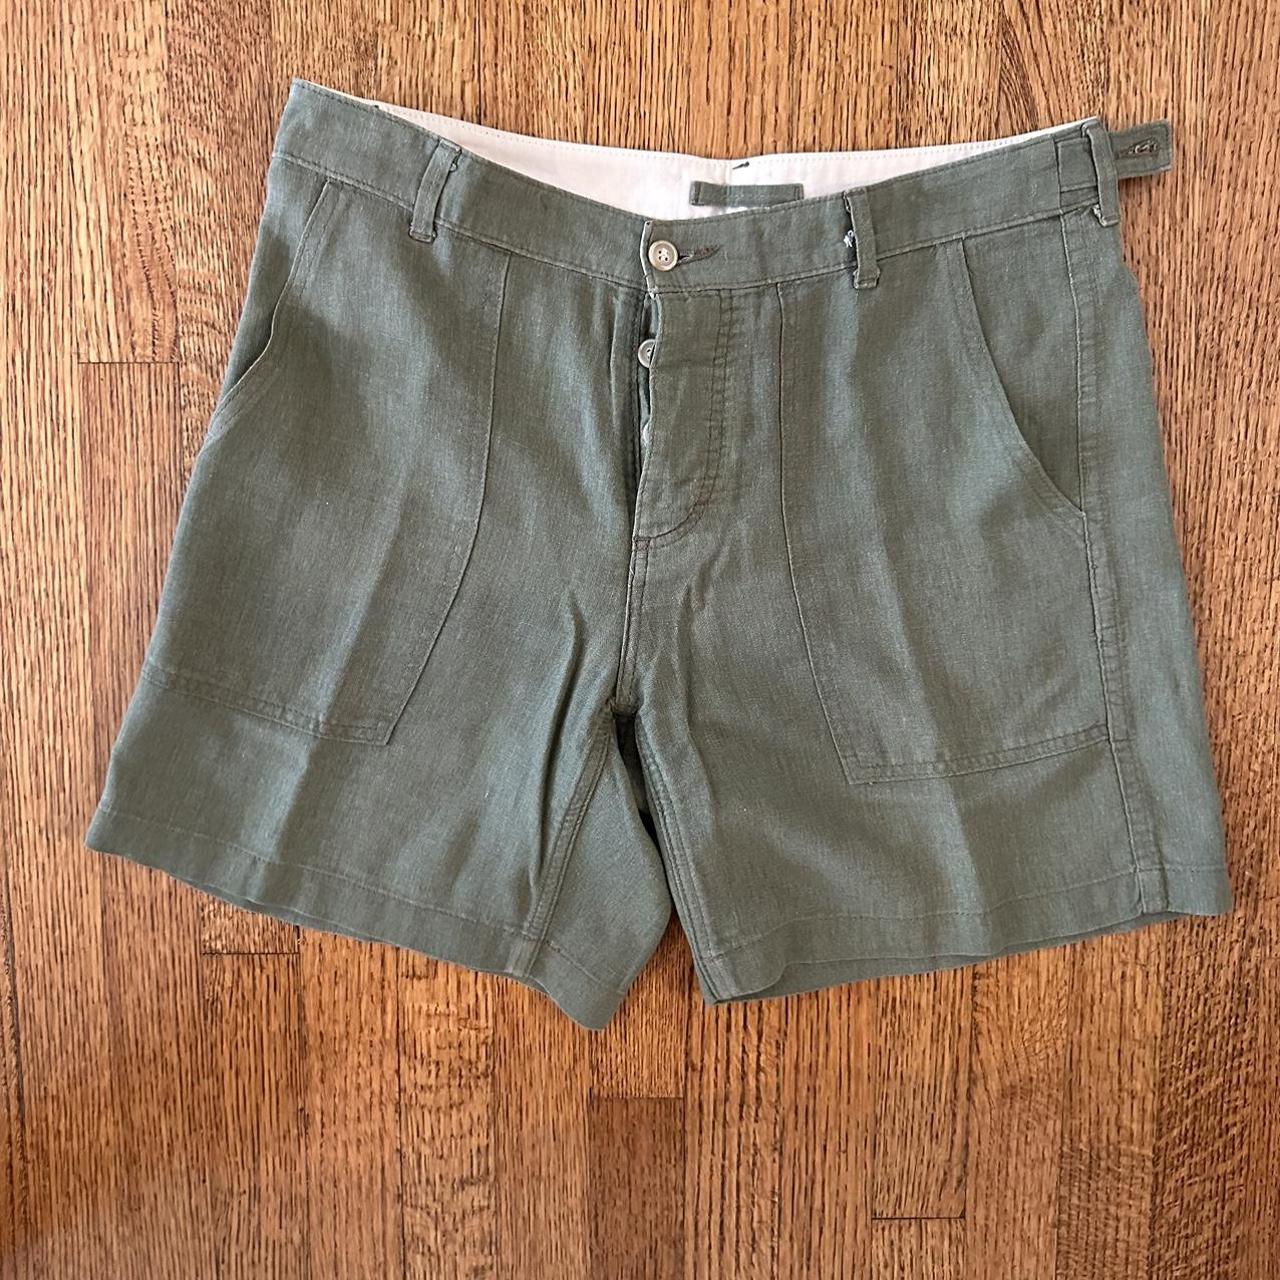 Apolis Men's Green Shorts